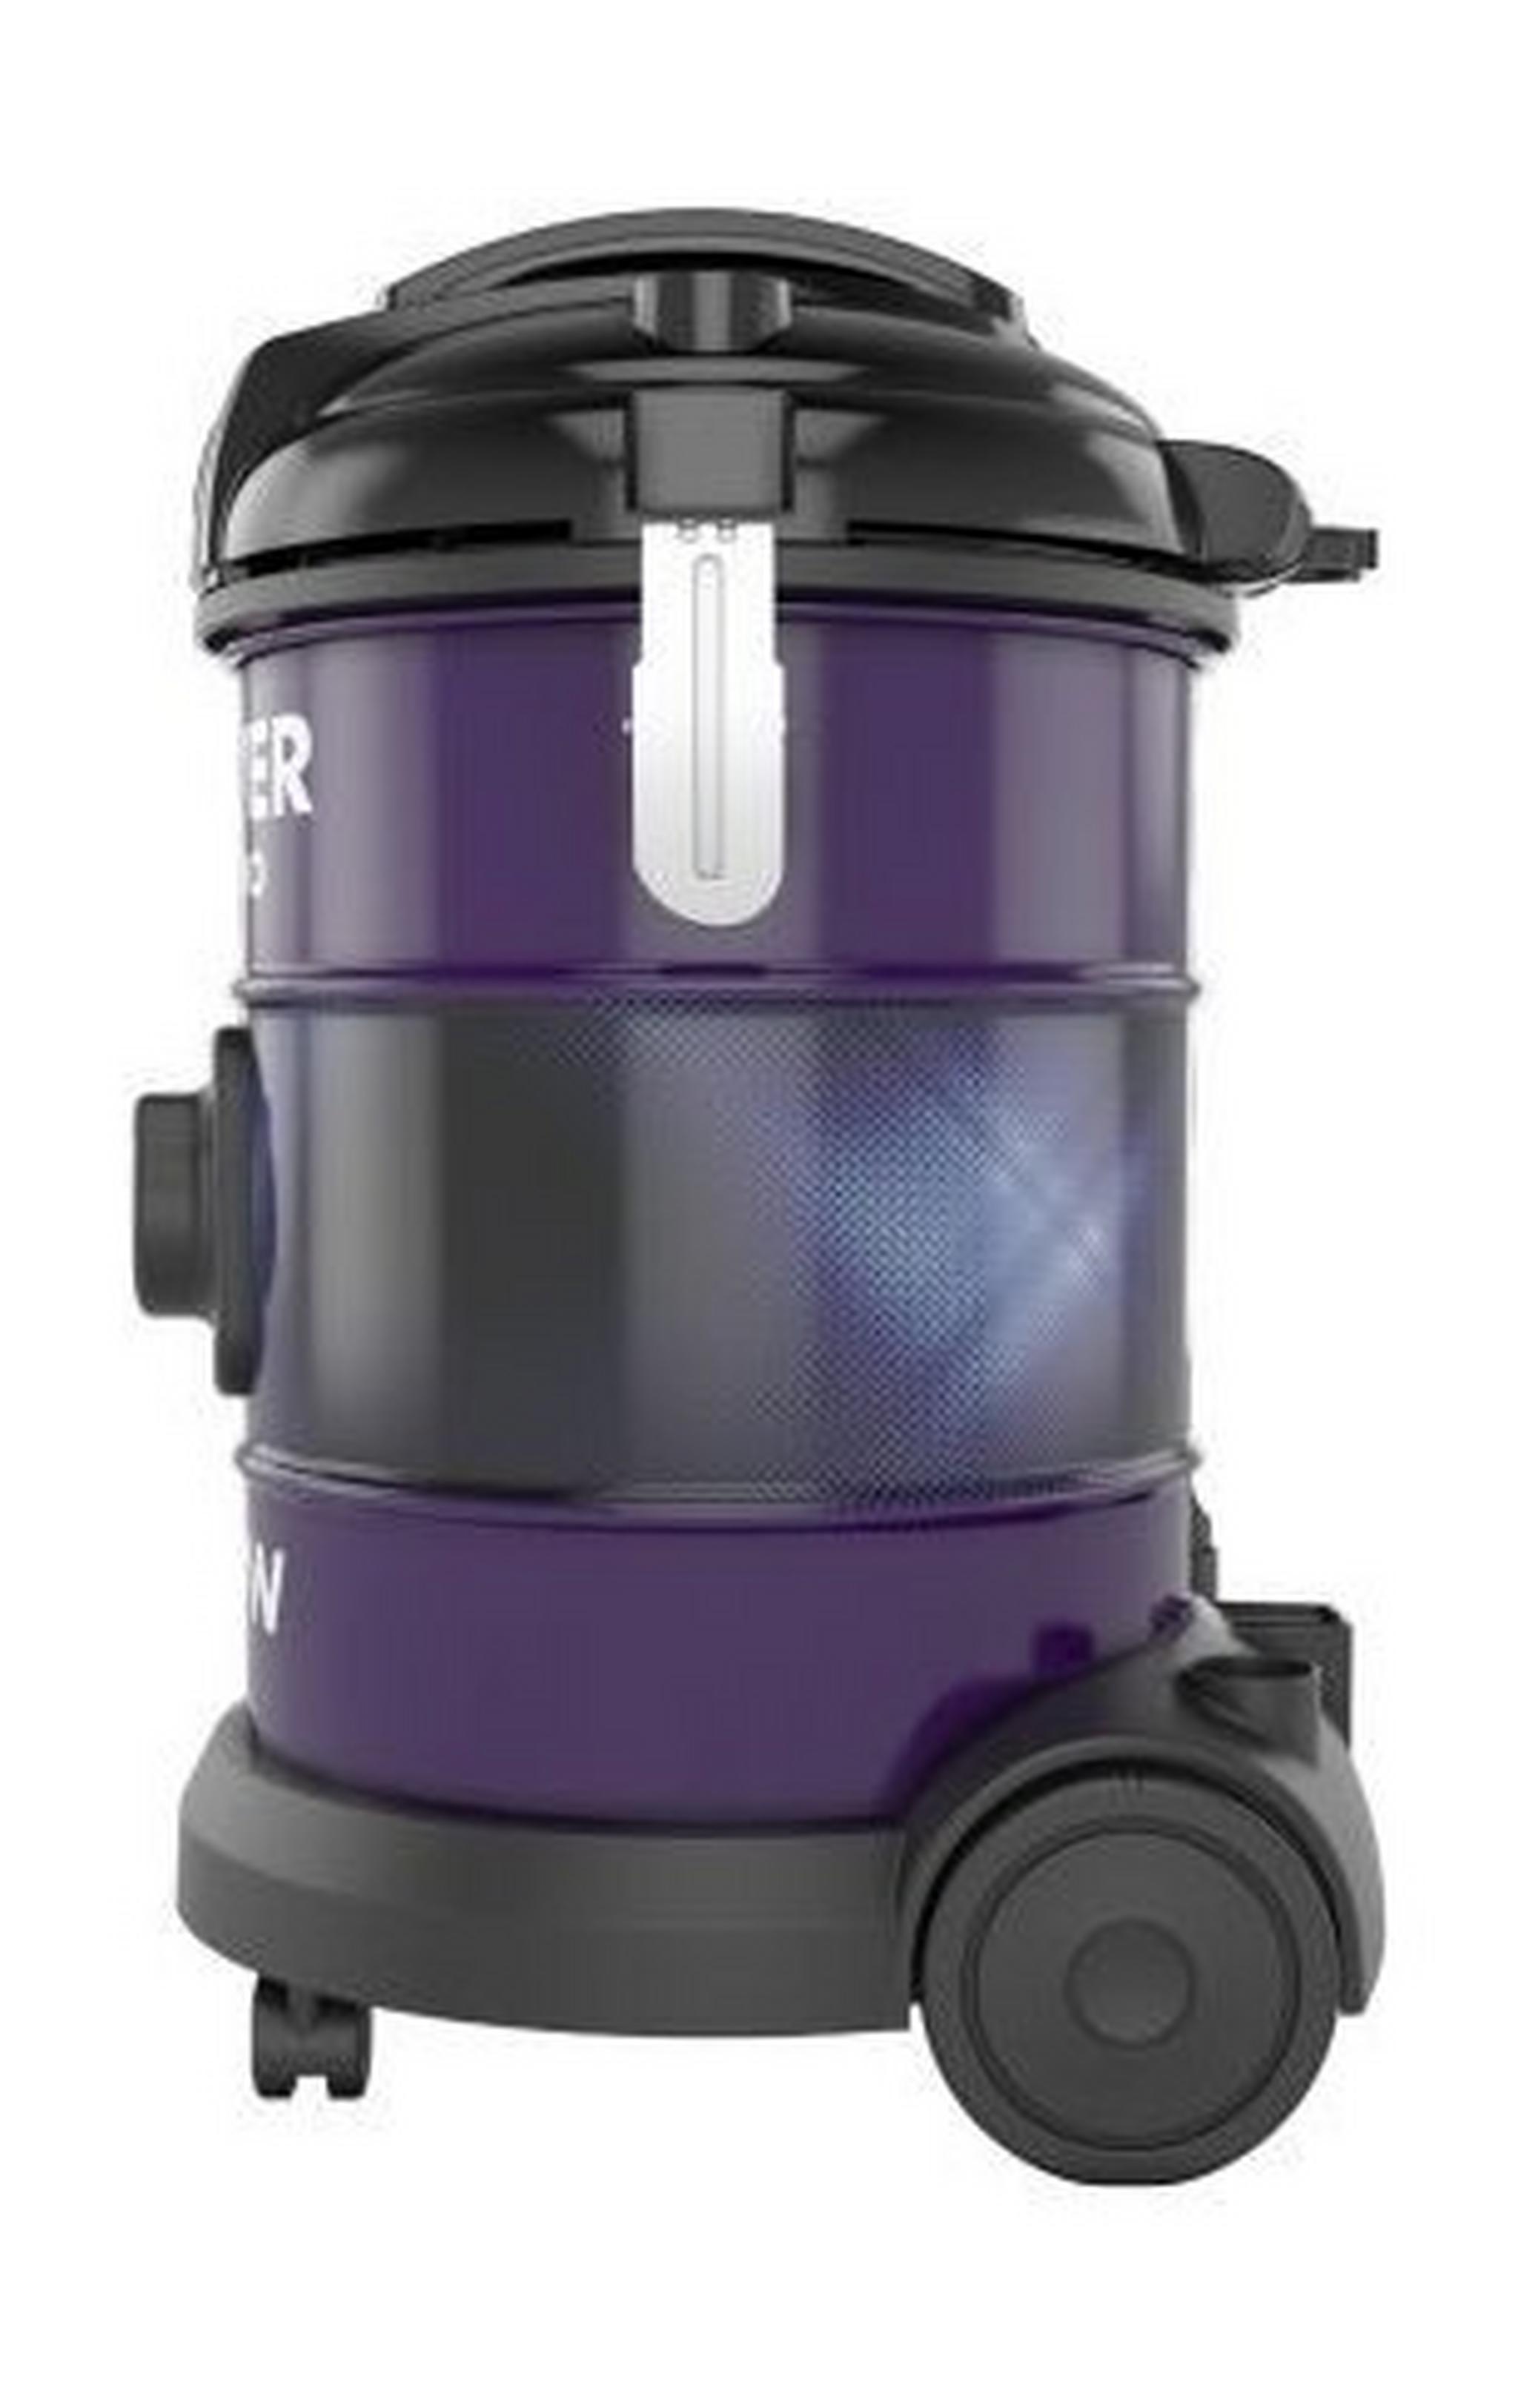 Hoover Power Pro Drum Vacuum Cleaner, 2300W, 22L, HT85-T3-ME - Violet